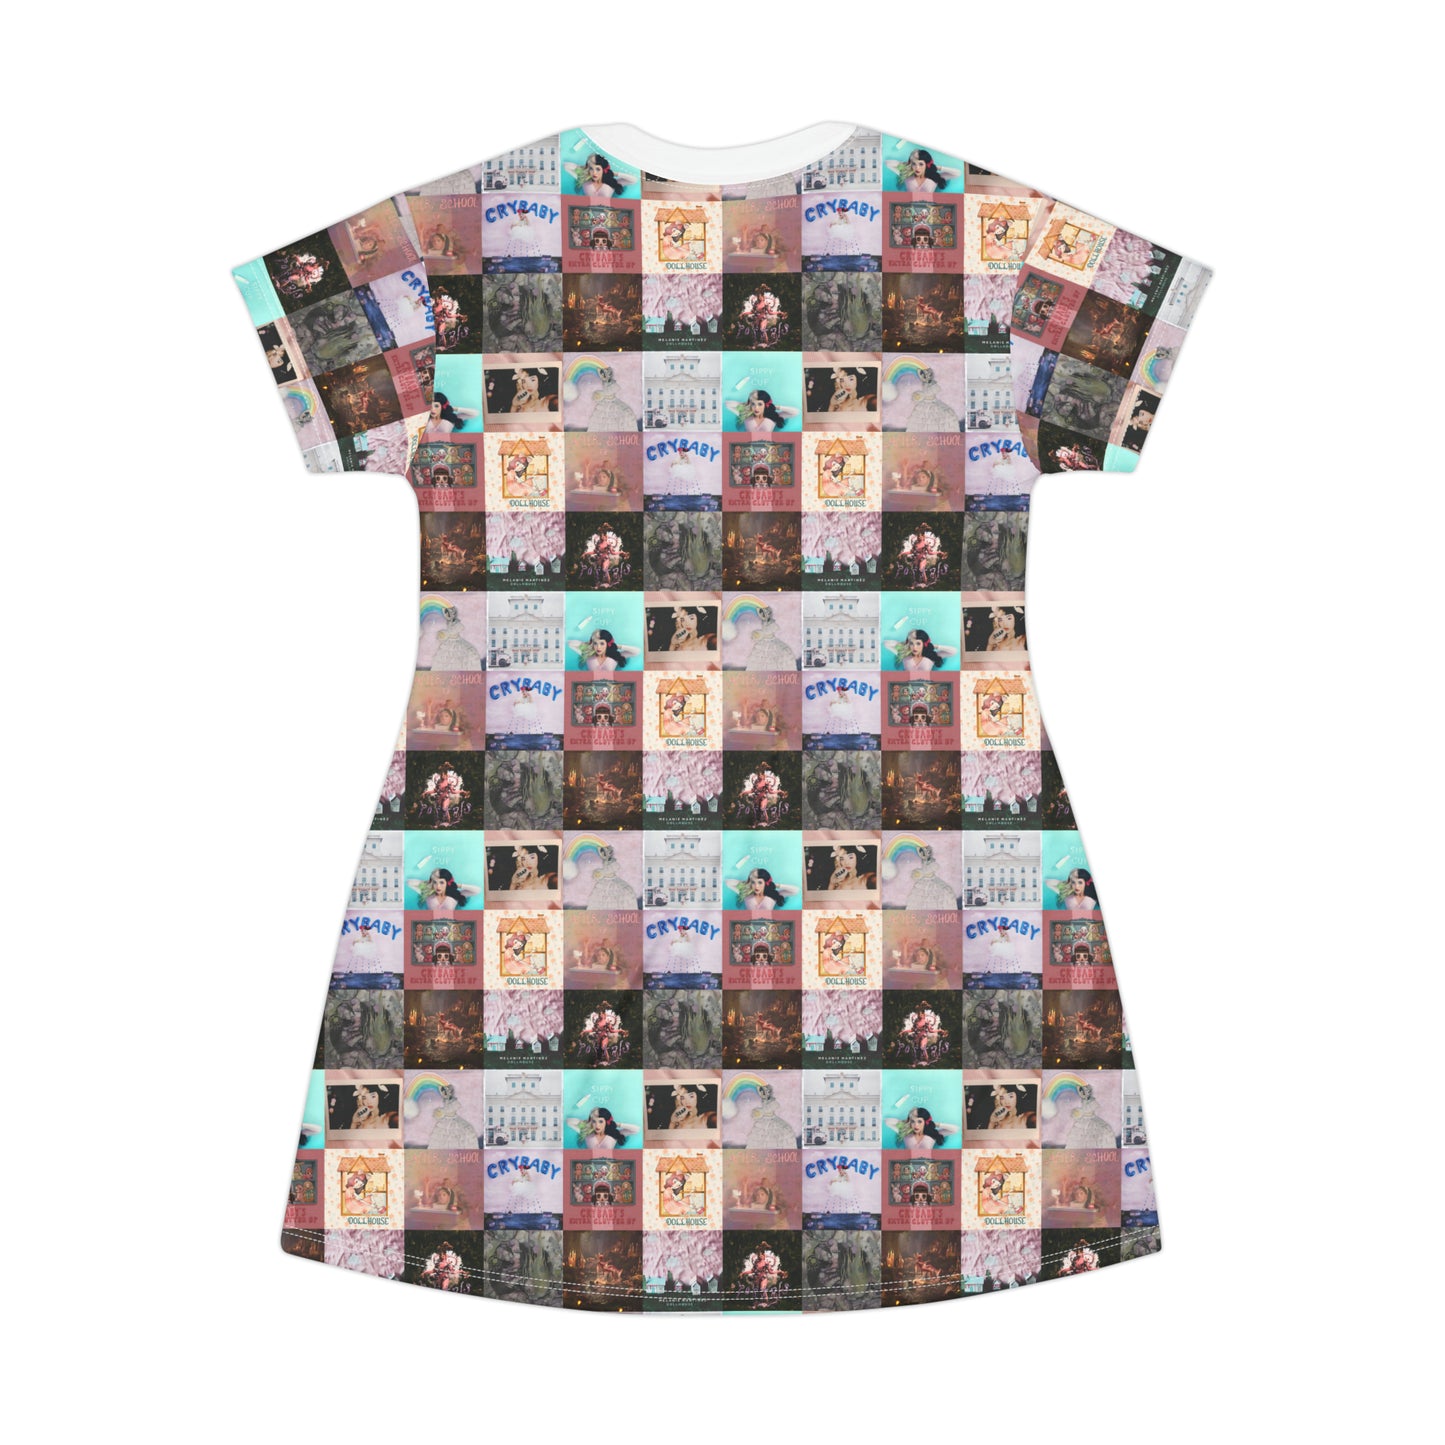 Melanie Martinez Album Art Collage T-Shirt Dress